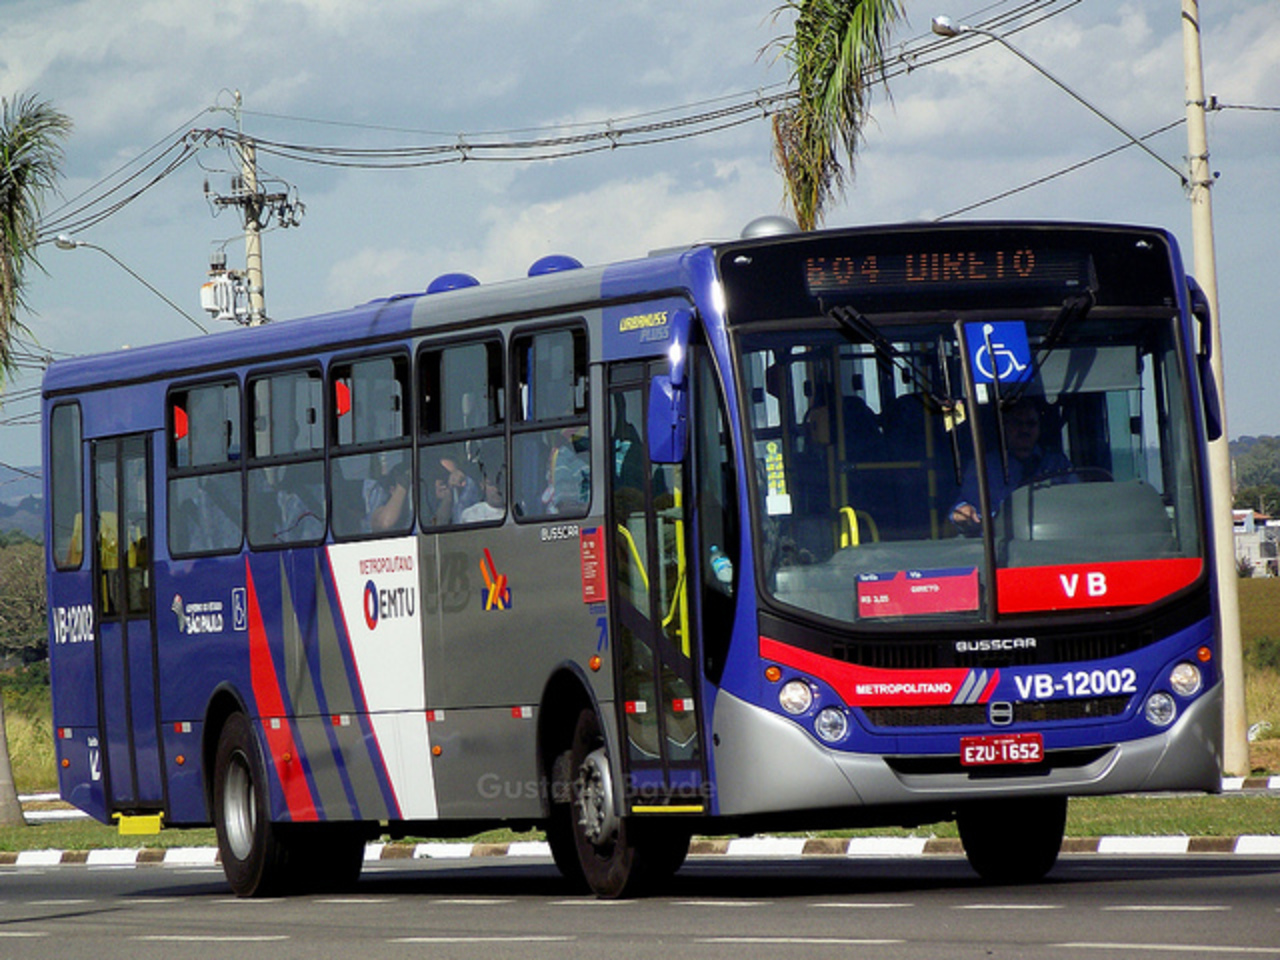 VB 12002 - Busscar Urbanuss Pluss Mercedes-Benz OF-1722M | Flickr ...